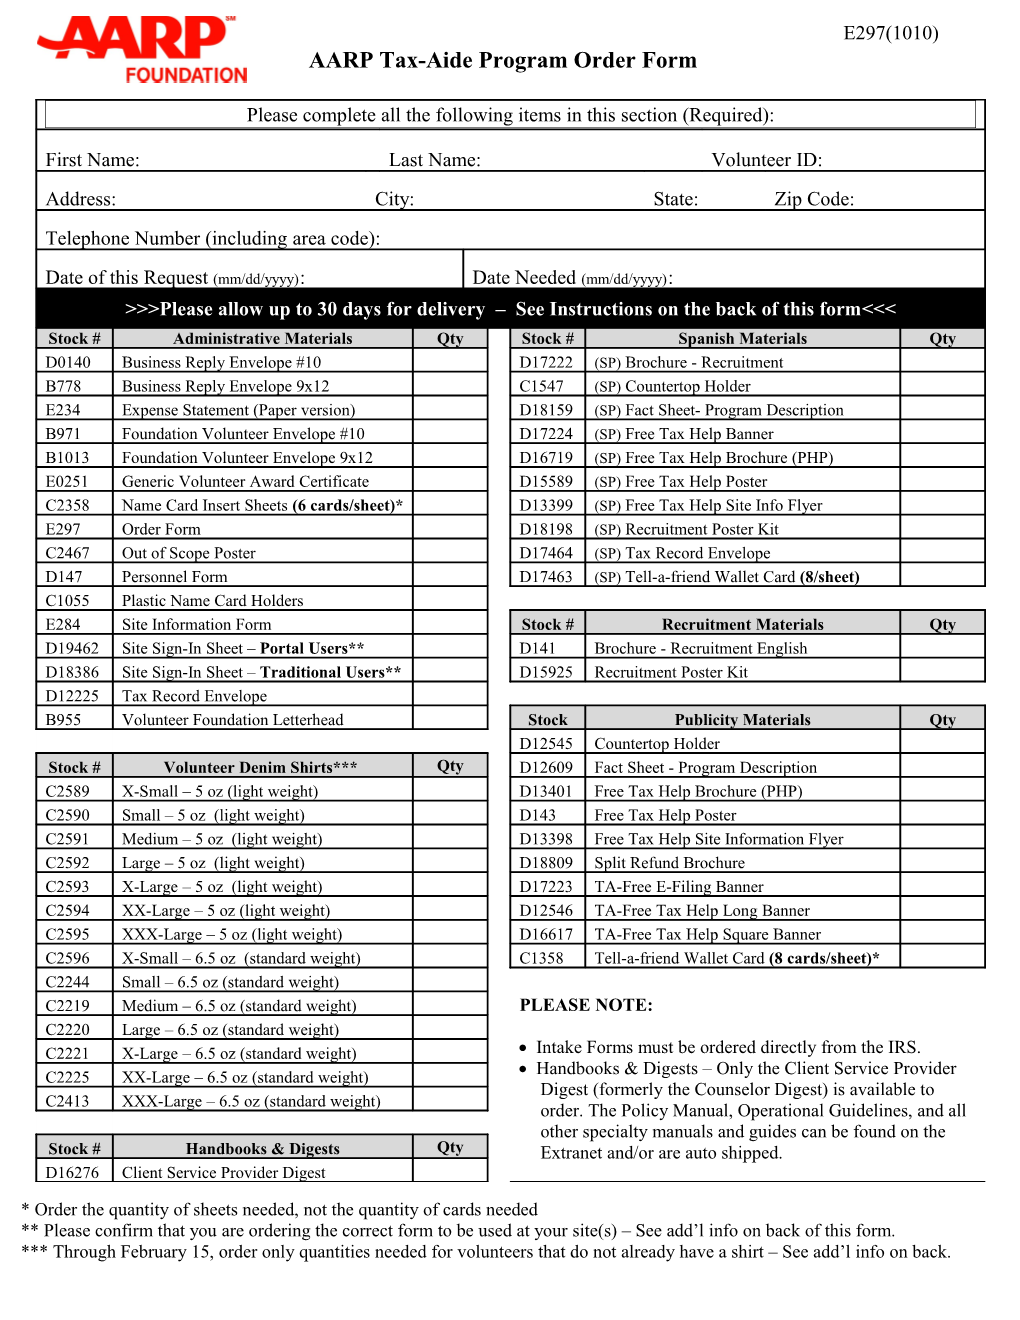 Program Materials Order Form